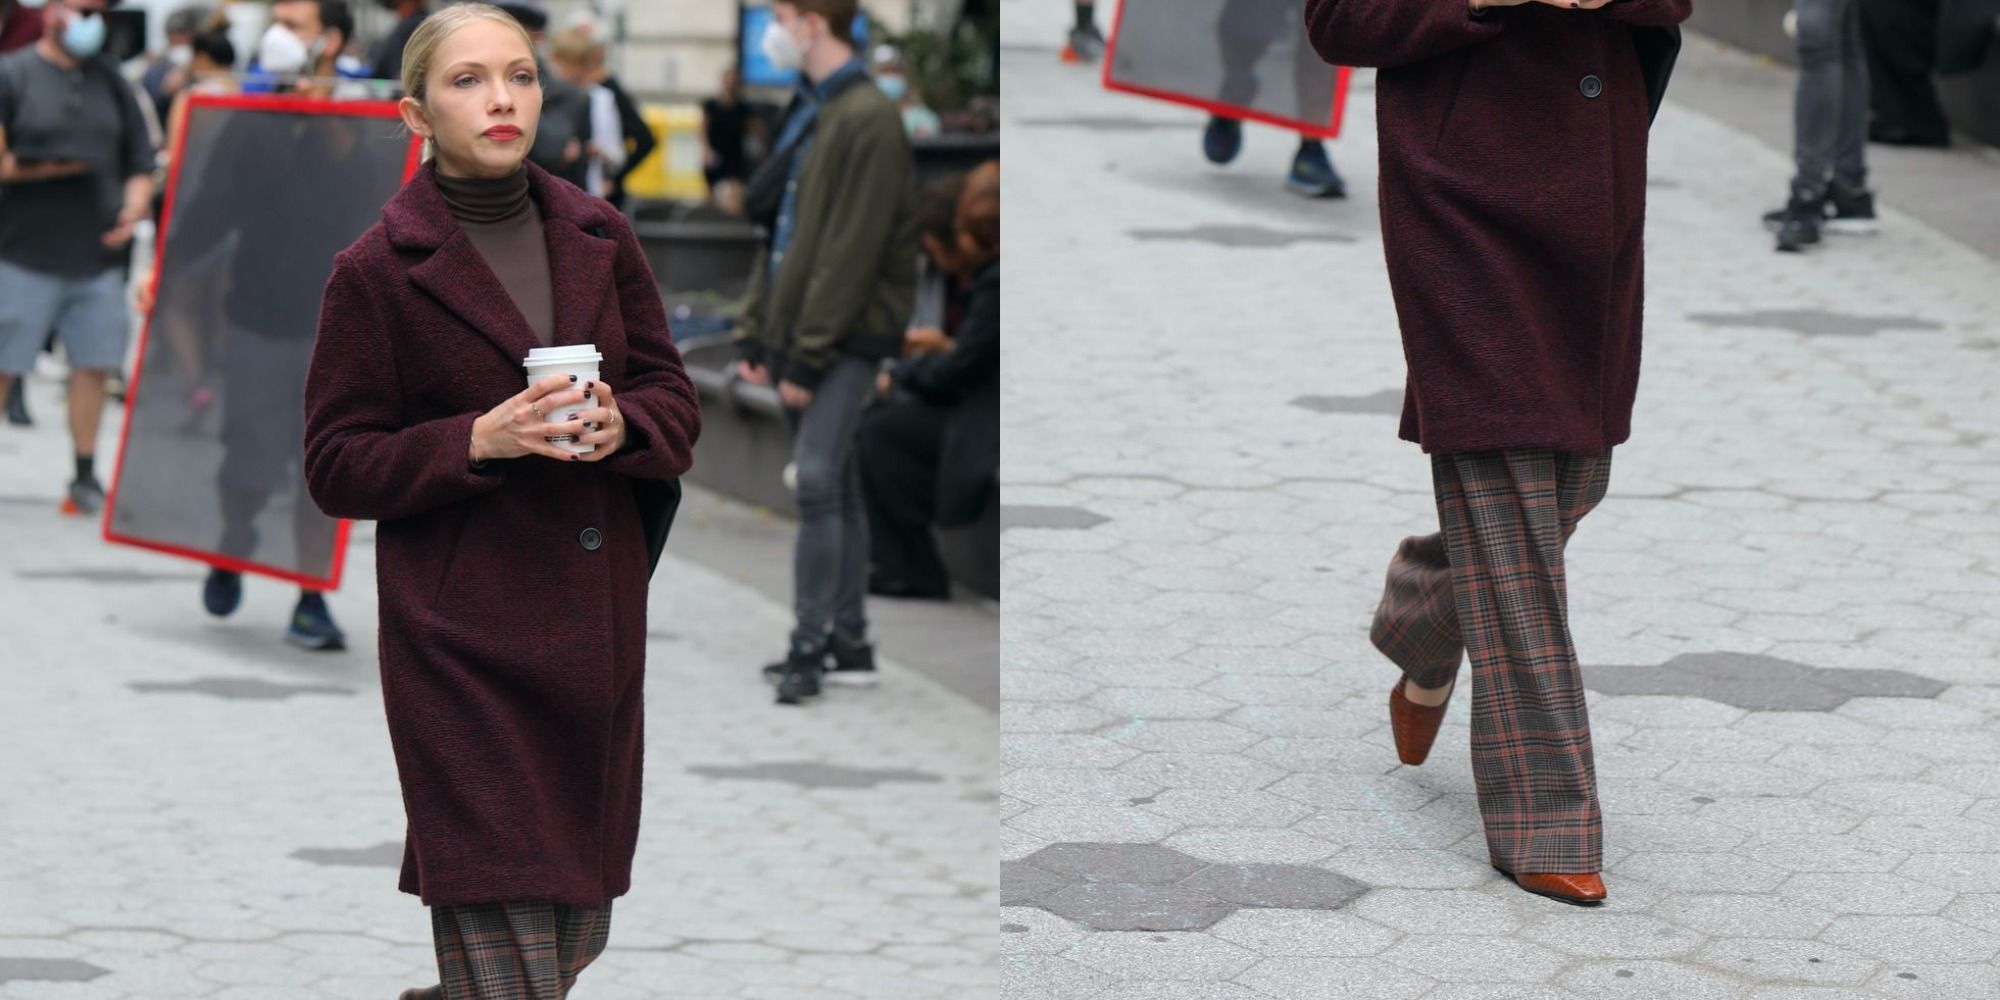 Kate Keller walks with a coffee in her hand in Gossip Girl.